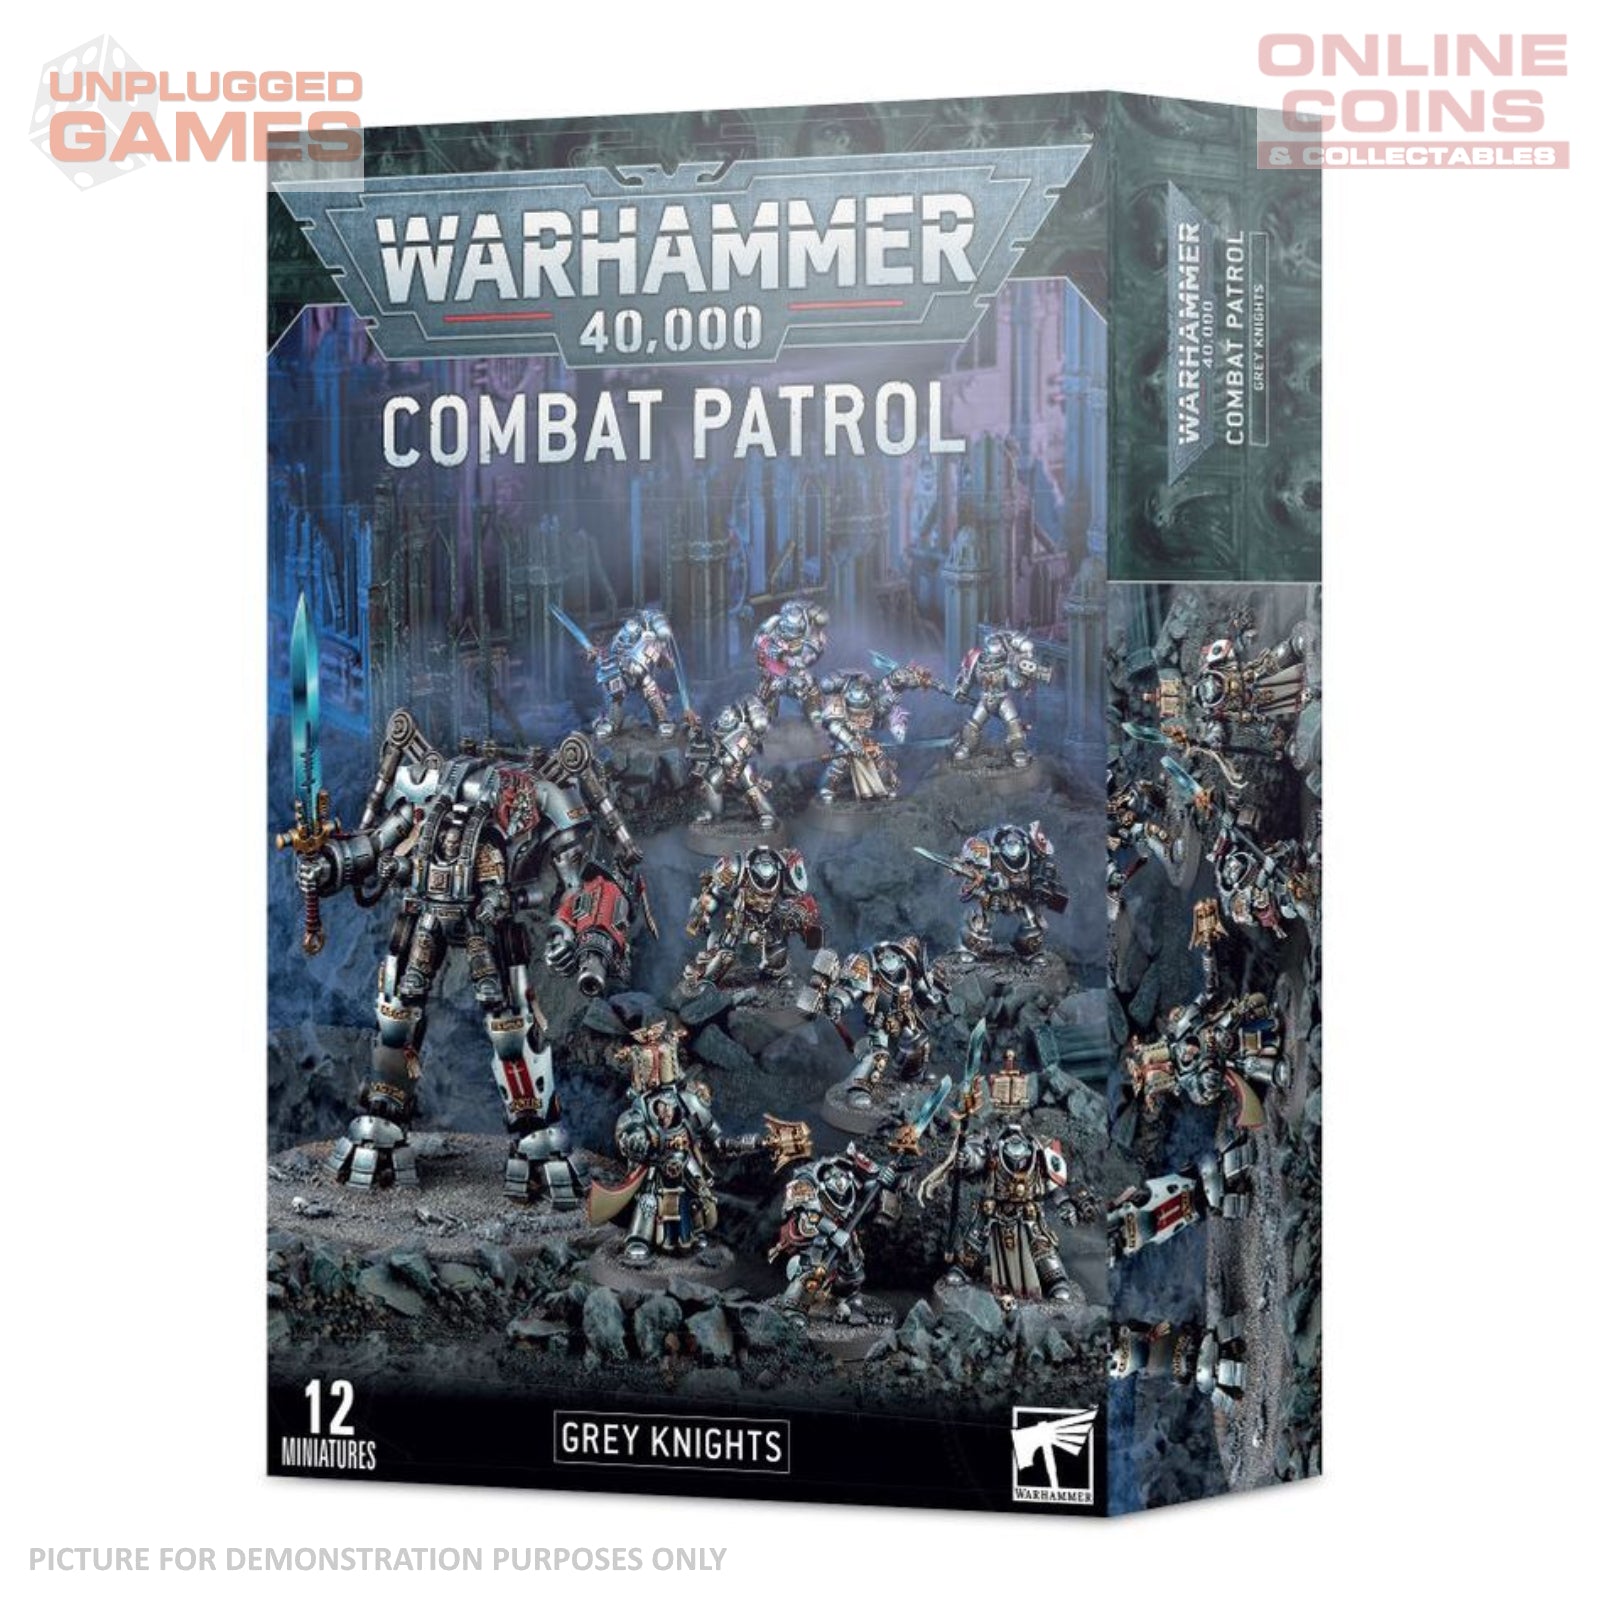 Warhammer 40,000 - Combat Patrol Grey Knights